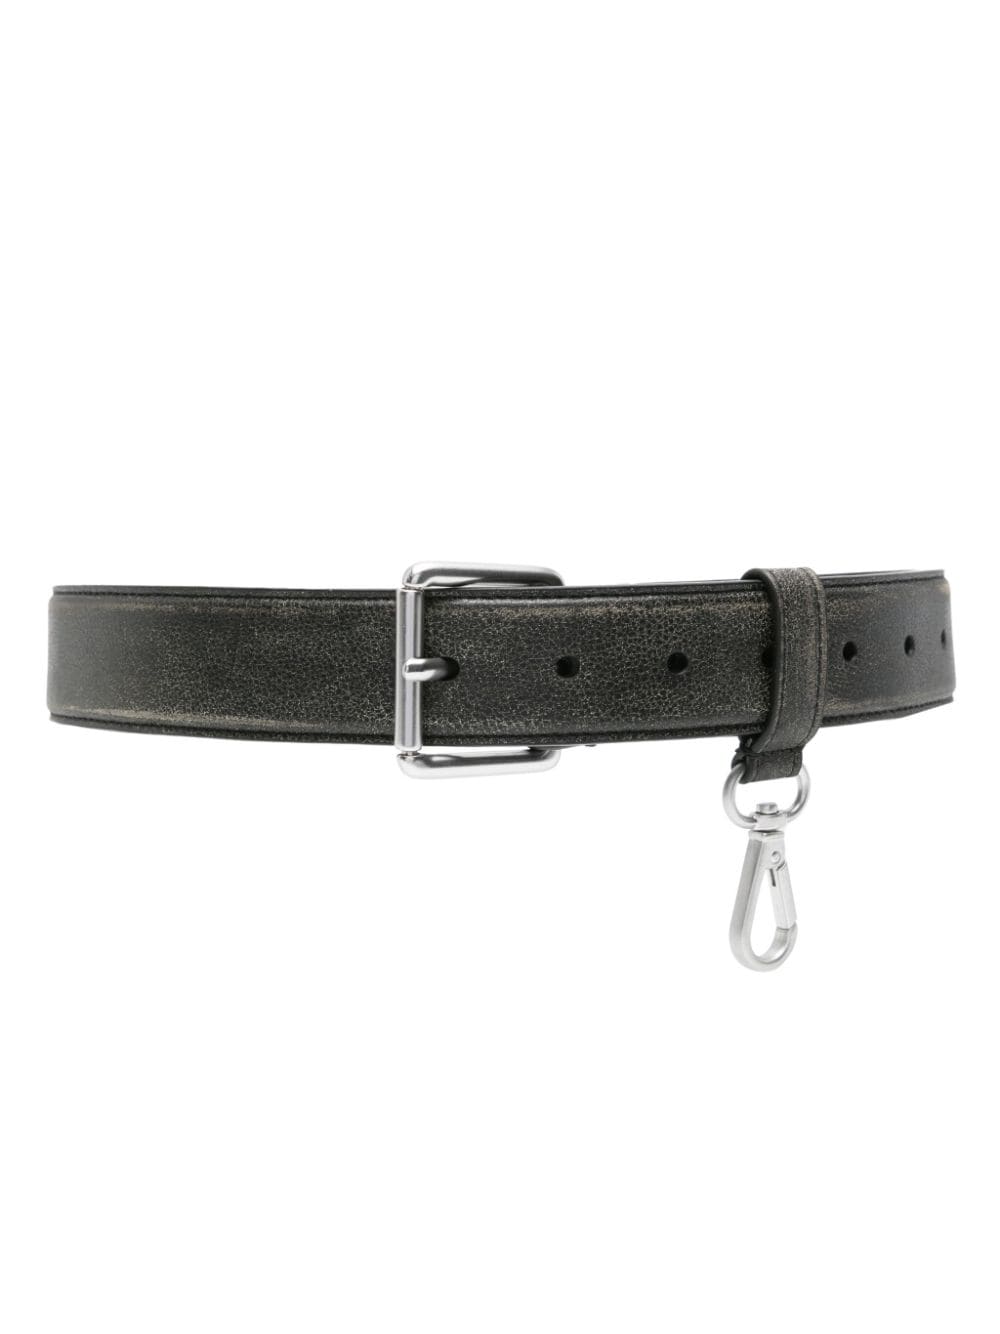 MM6 Maison Margiela distressed leather belt - Black von MM6 Maison Margiela